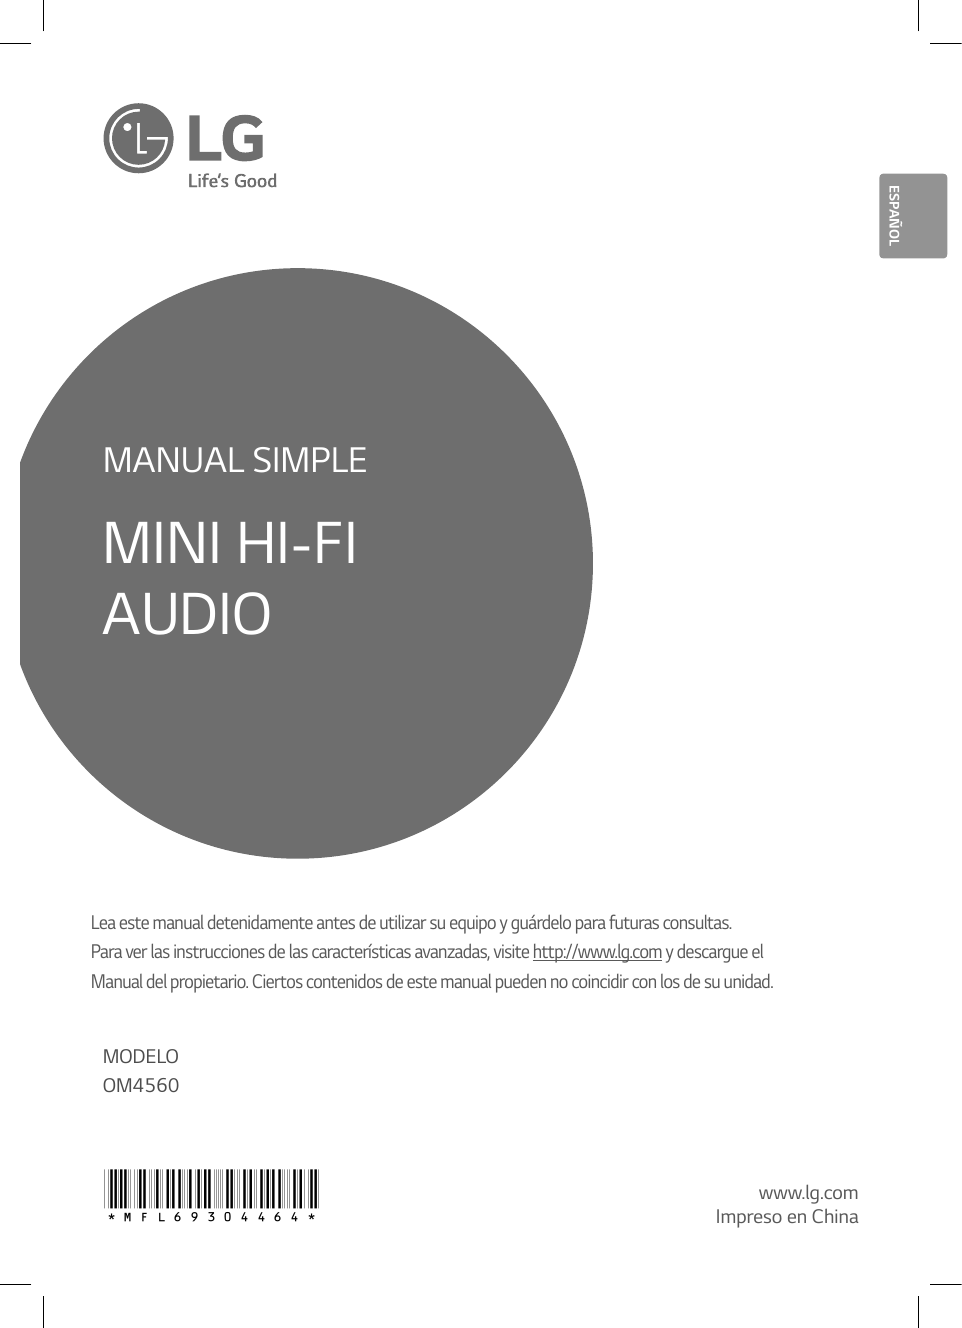 Page 1 of 4 - LG OM4560 User Manual Guide OM4560-FB.DUSALLB SIMPLE NEW SPA MFL69304464